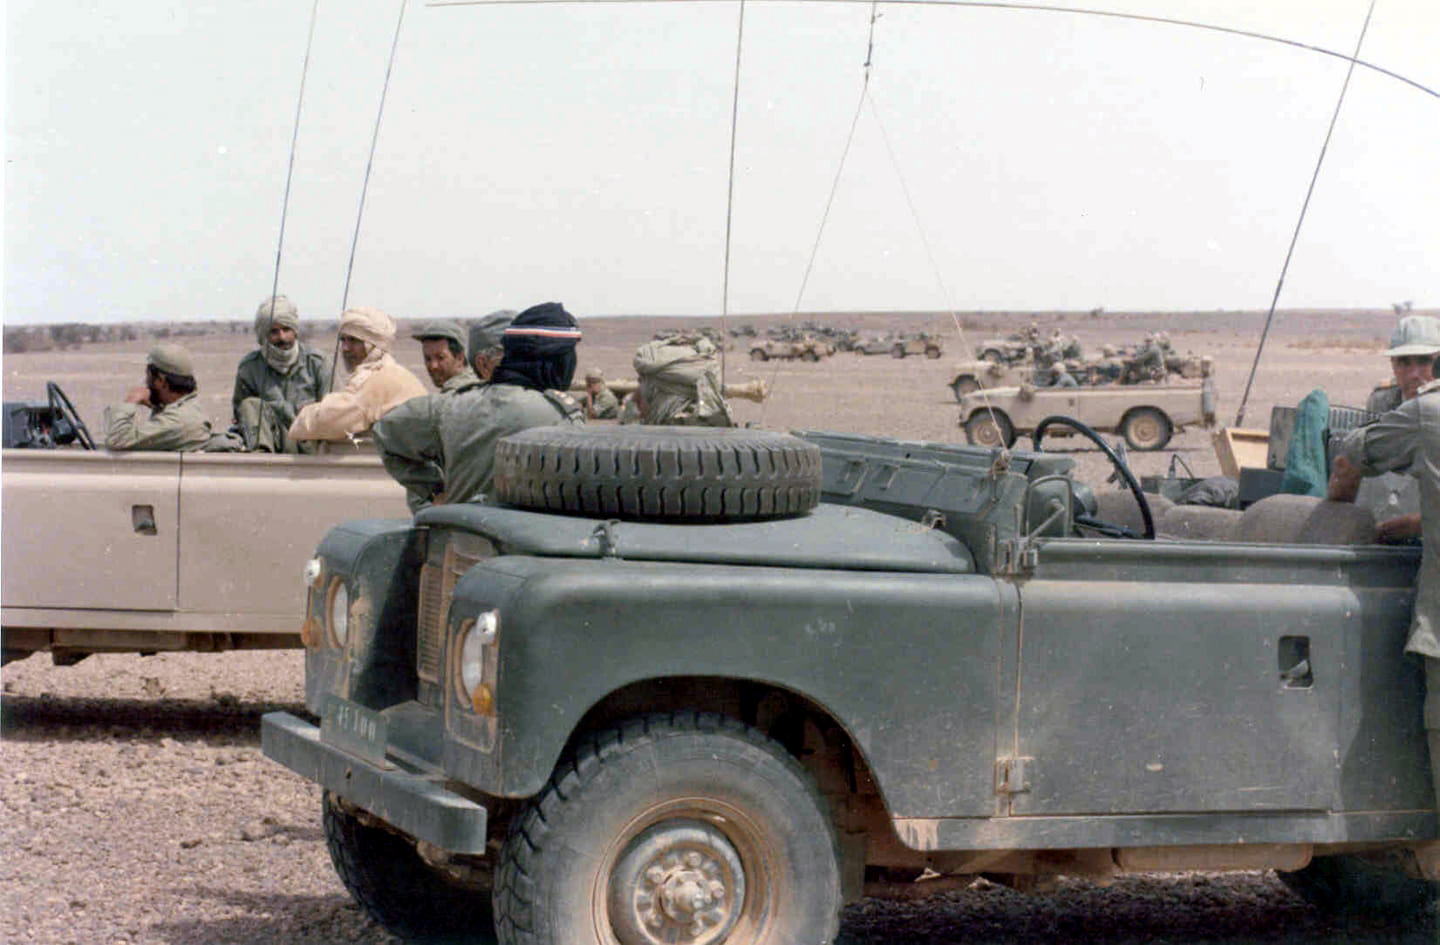  Août 1991 - Opération de ratissage, Bir Lahlou et Tifariti 49314300351_f41aef82c0_o_d